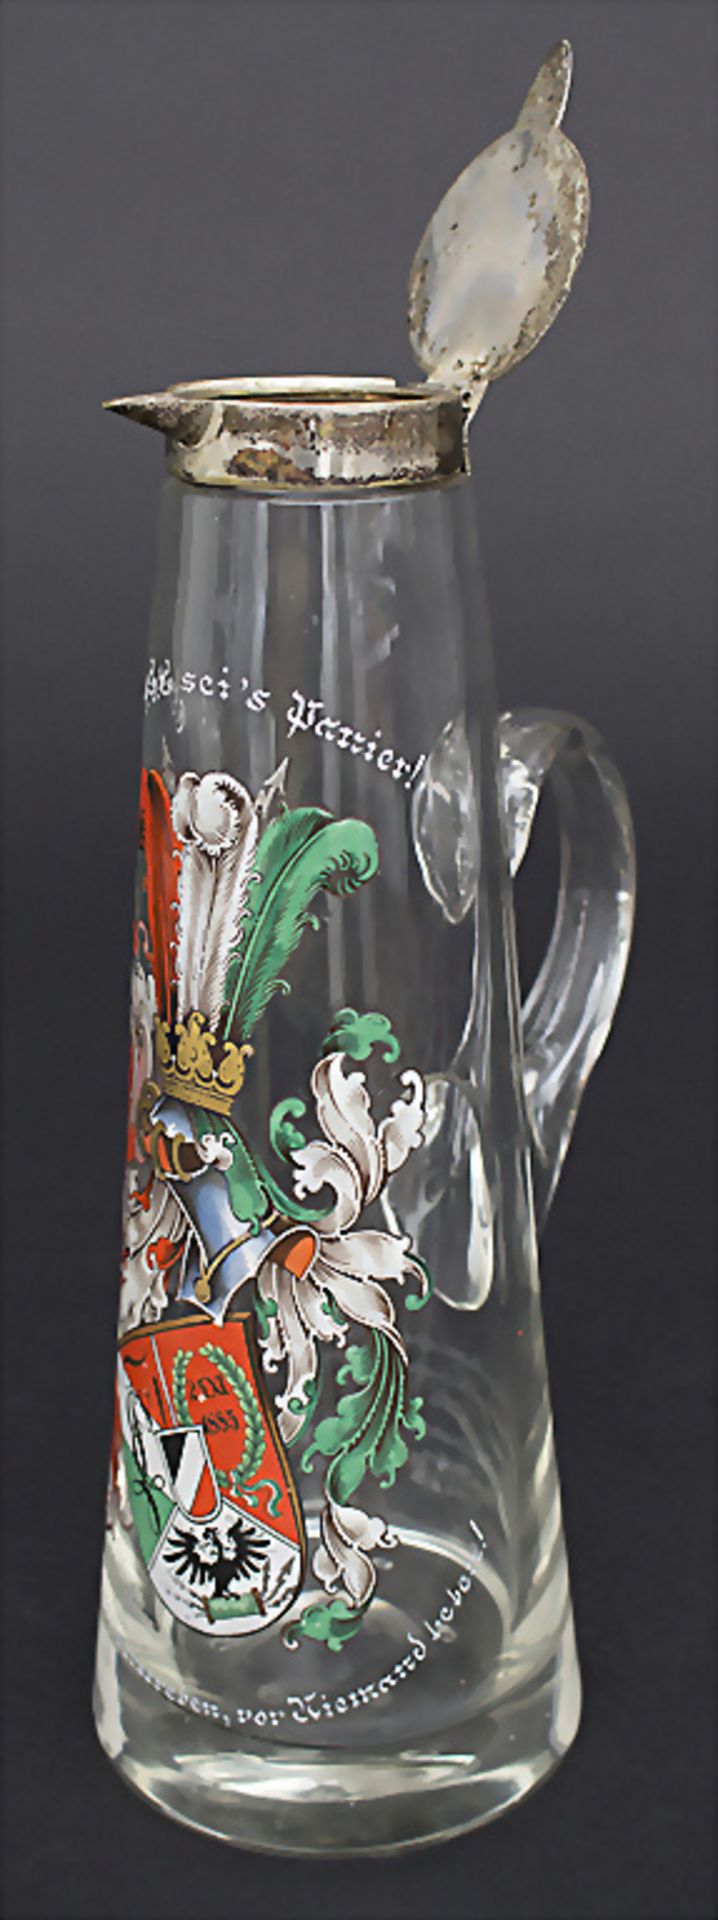 Burschenschaft-Schenkkrug / A fraternity glass jug, um 1903 - Image 3 of 9